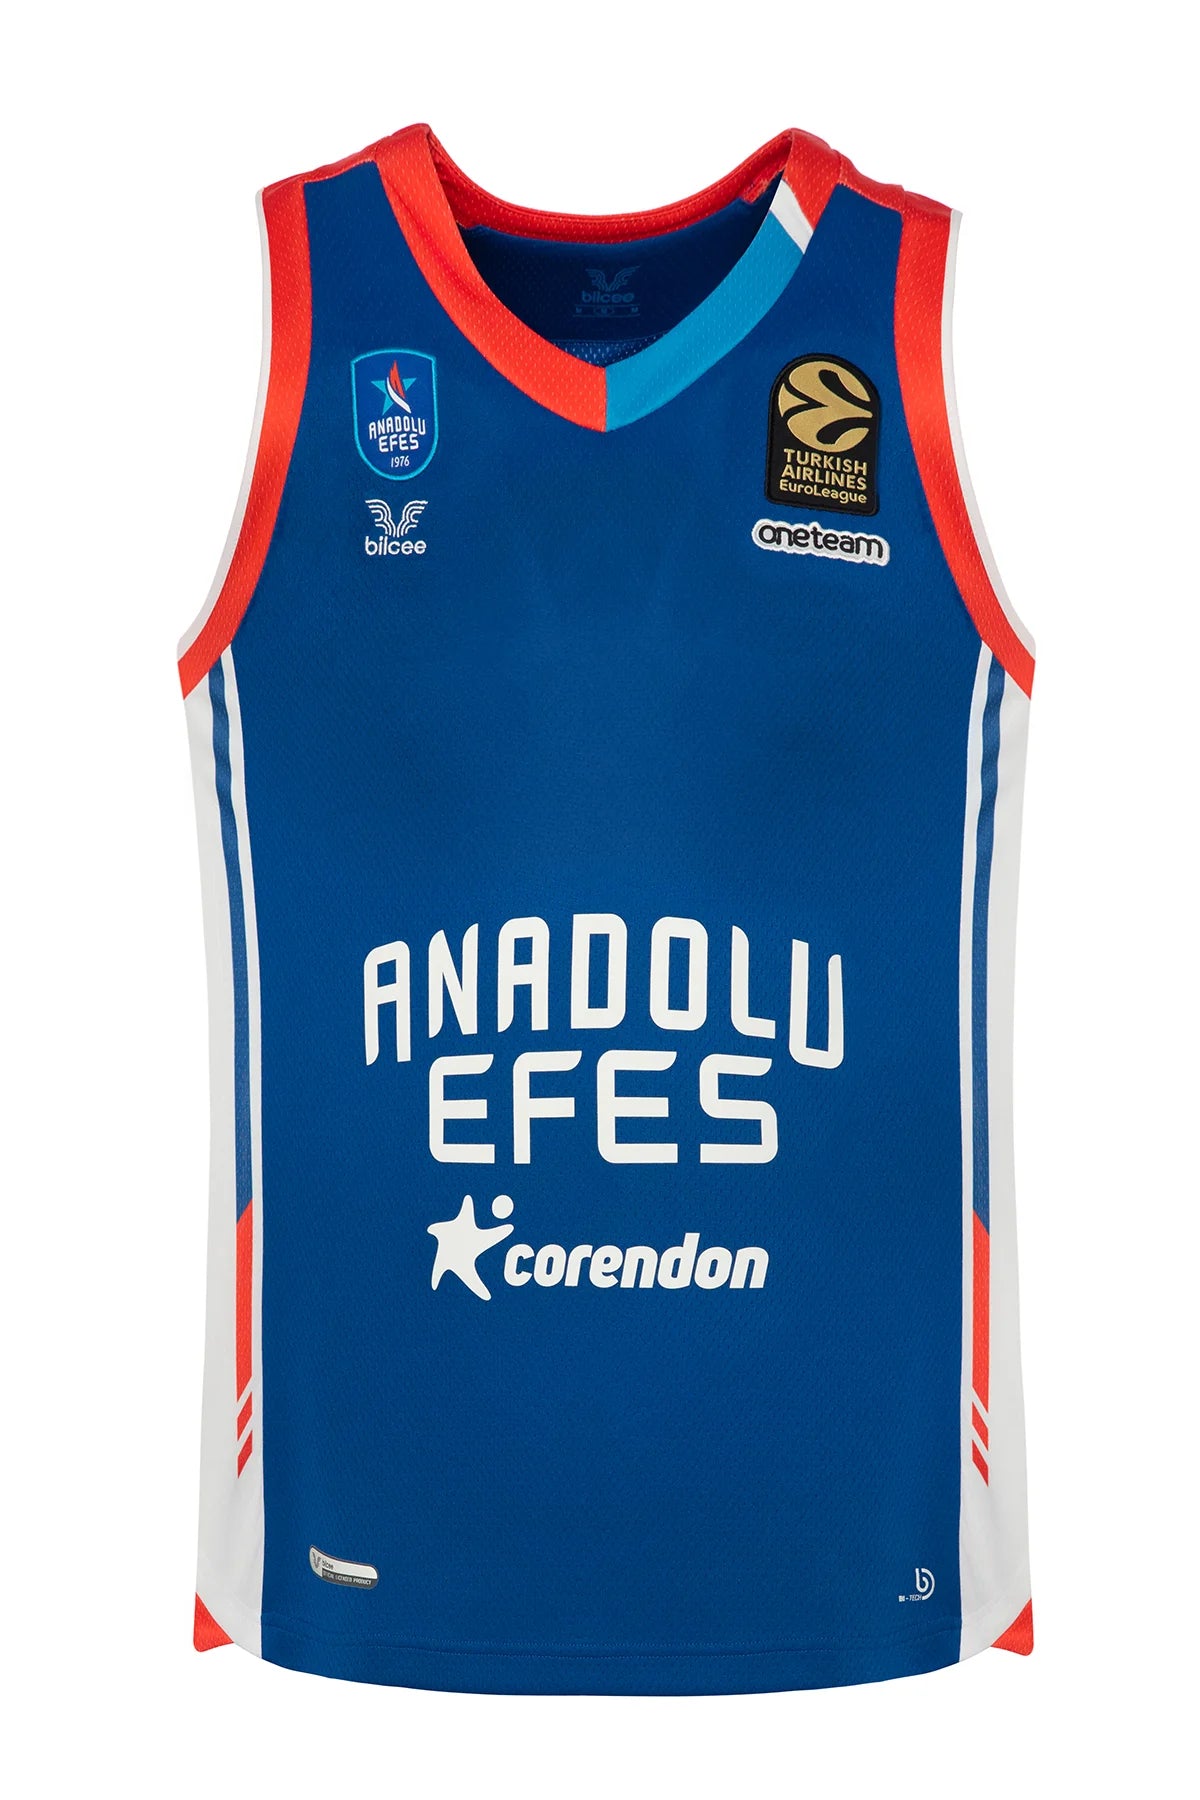 ANADOLU EFES BASKETBALL JERSEY - TurkishDefenceStore